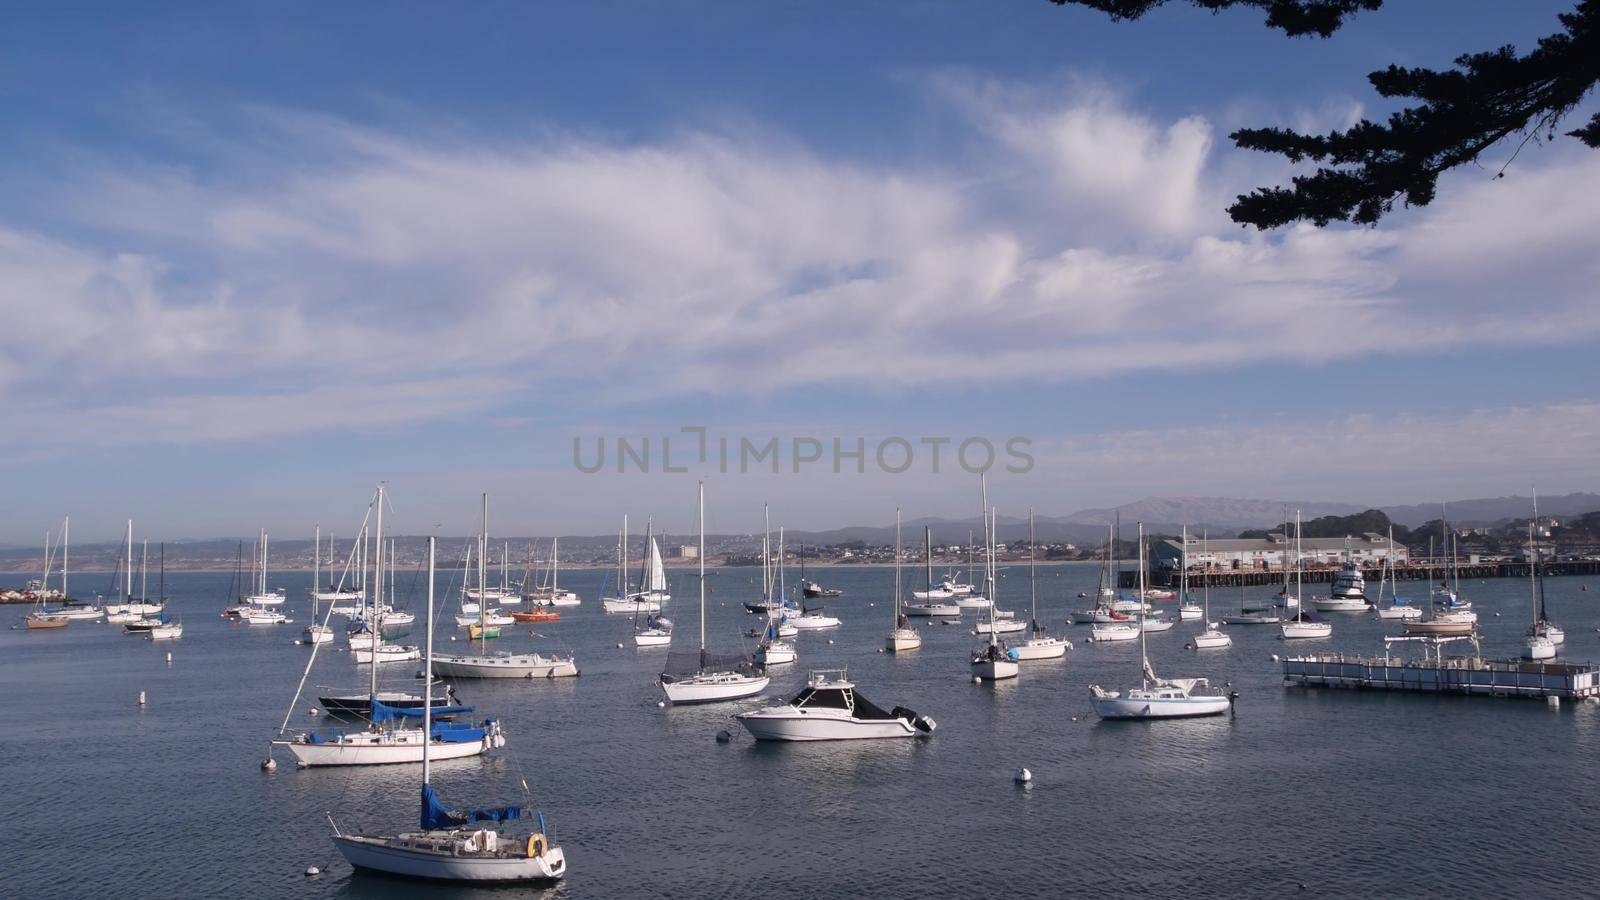 Yachts in harbor or bay, Monterey marina, Old Fishermans Wharf, California coast by DogoraSun